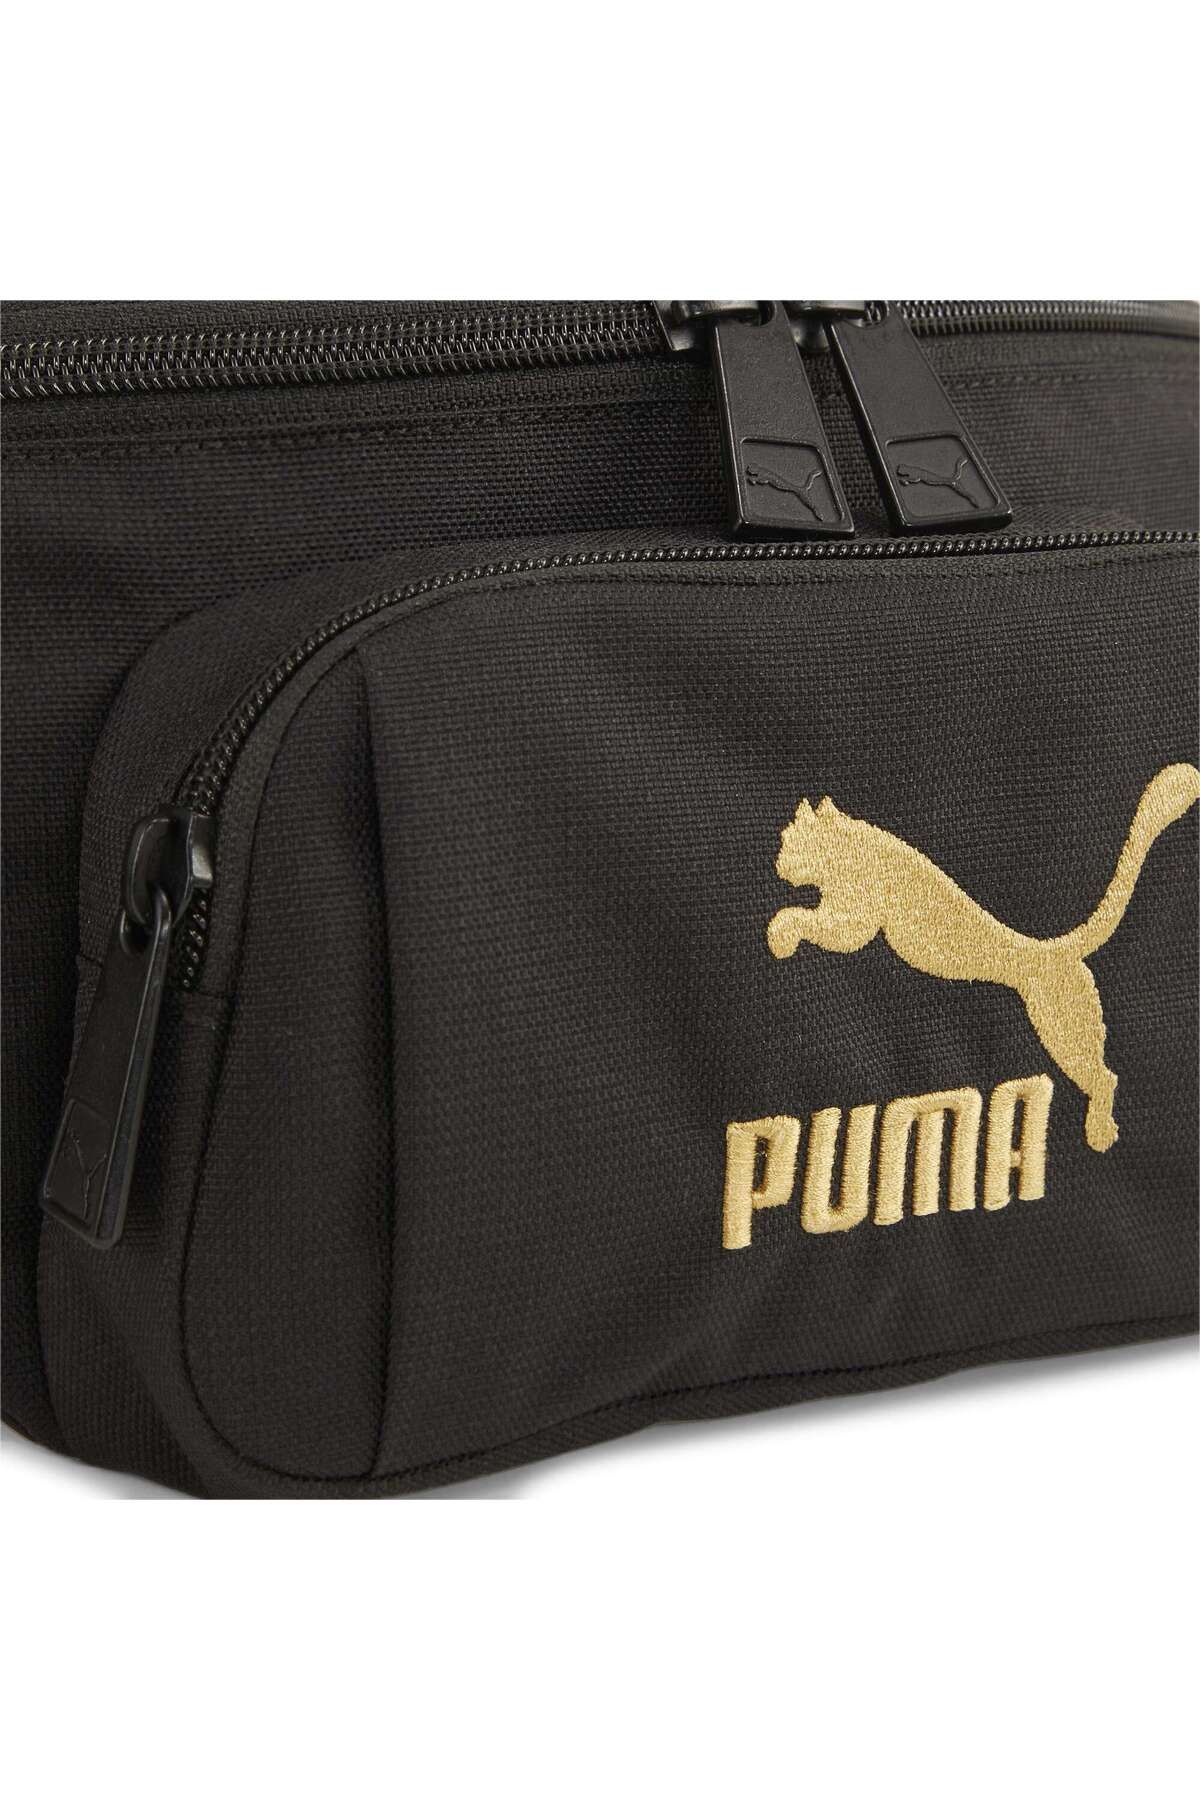 Puma کیف کمر بایگانی کلاسیک